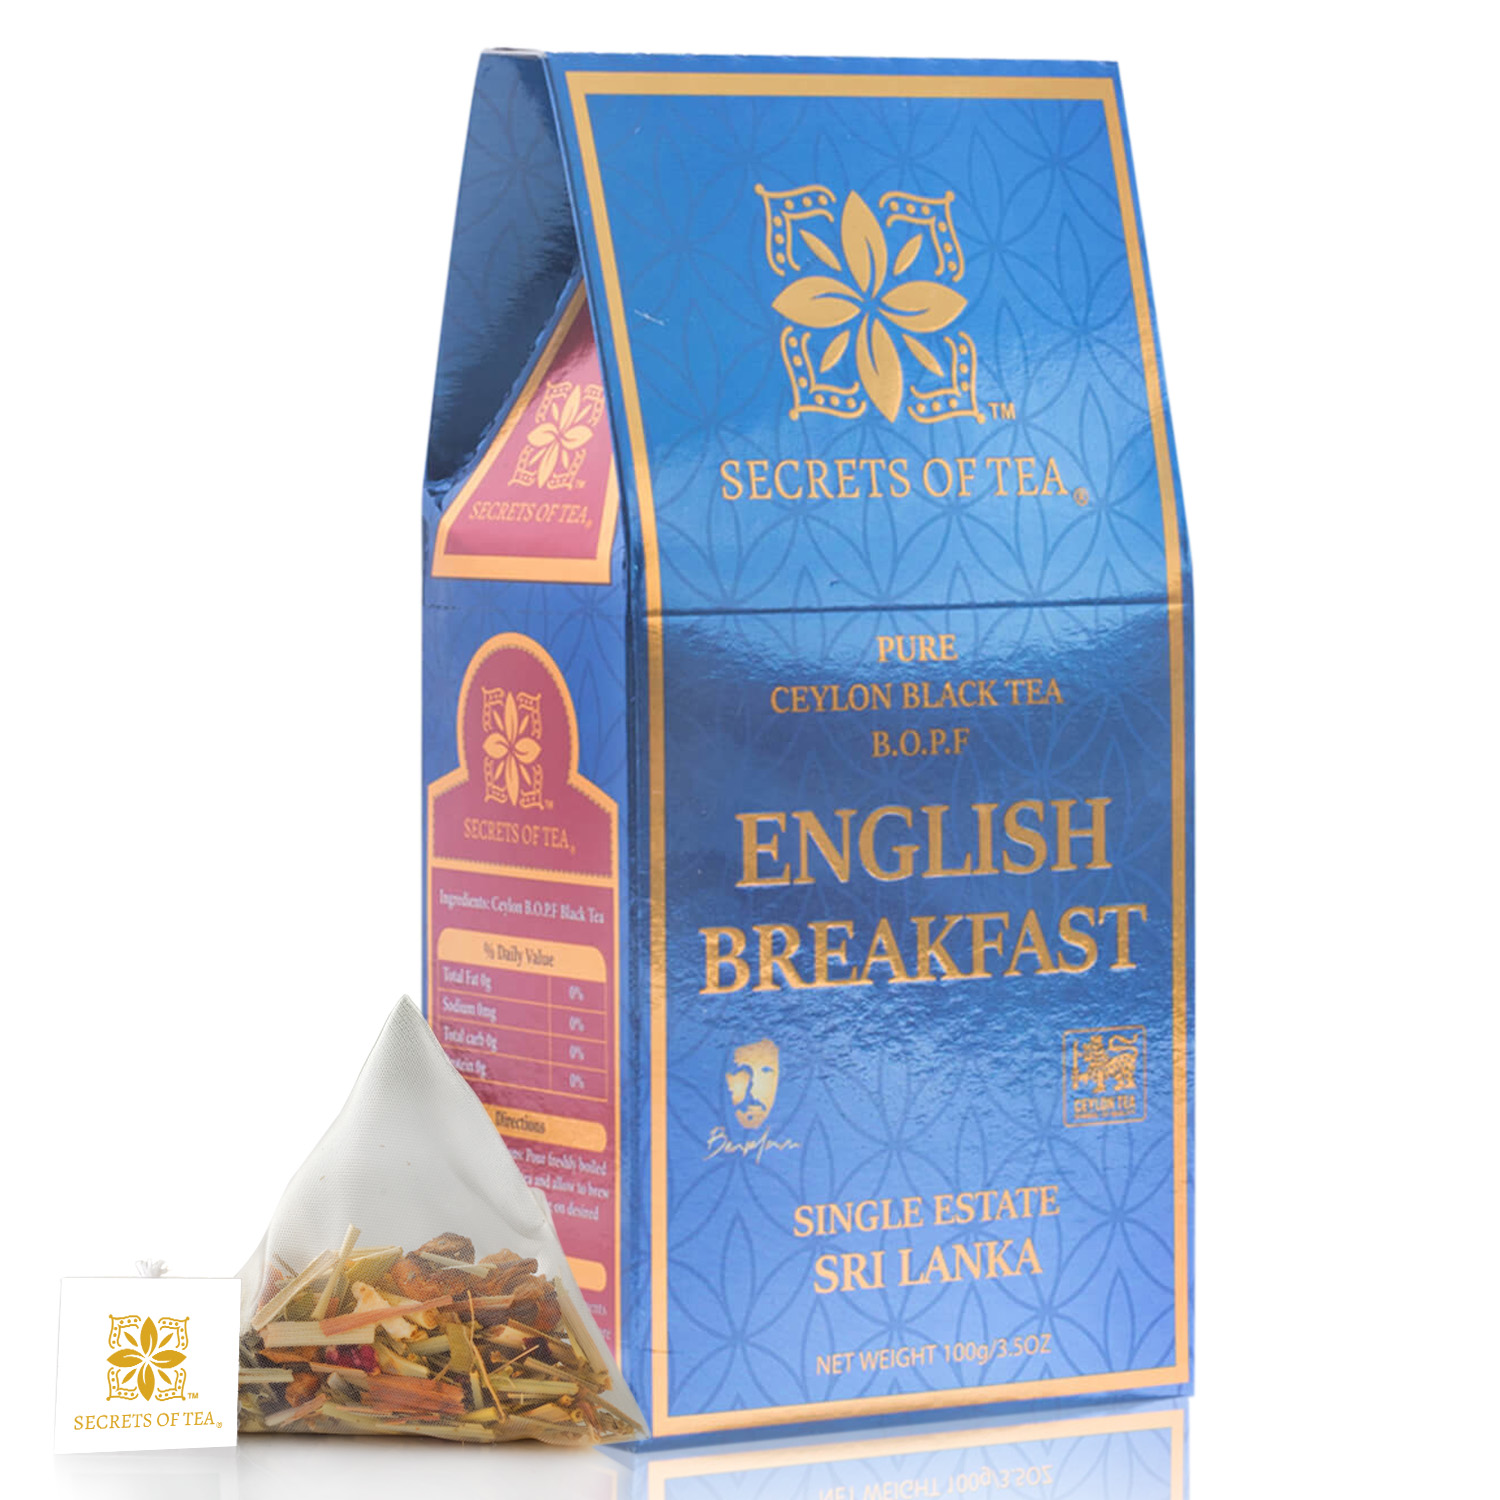 Secrets of Tea English Breakfast Tea 2 innerpacks per case 2.0 oz